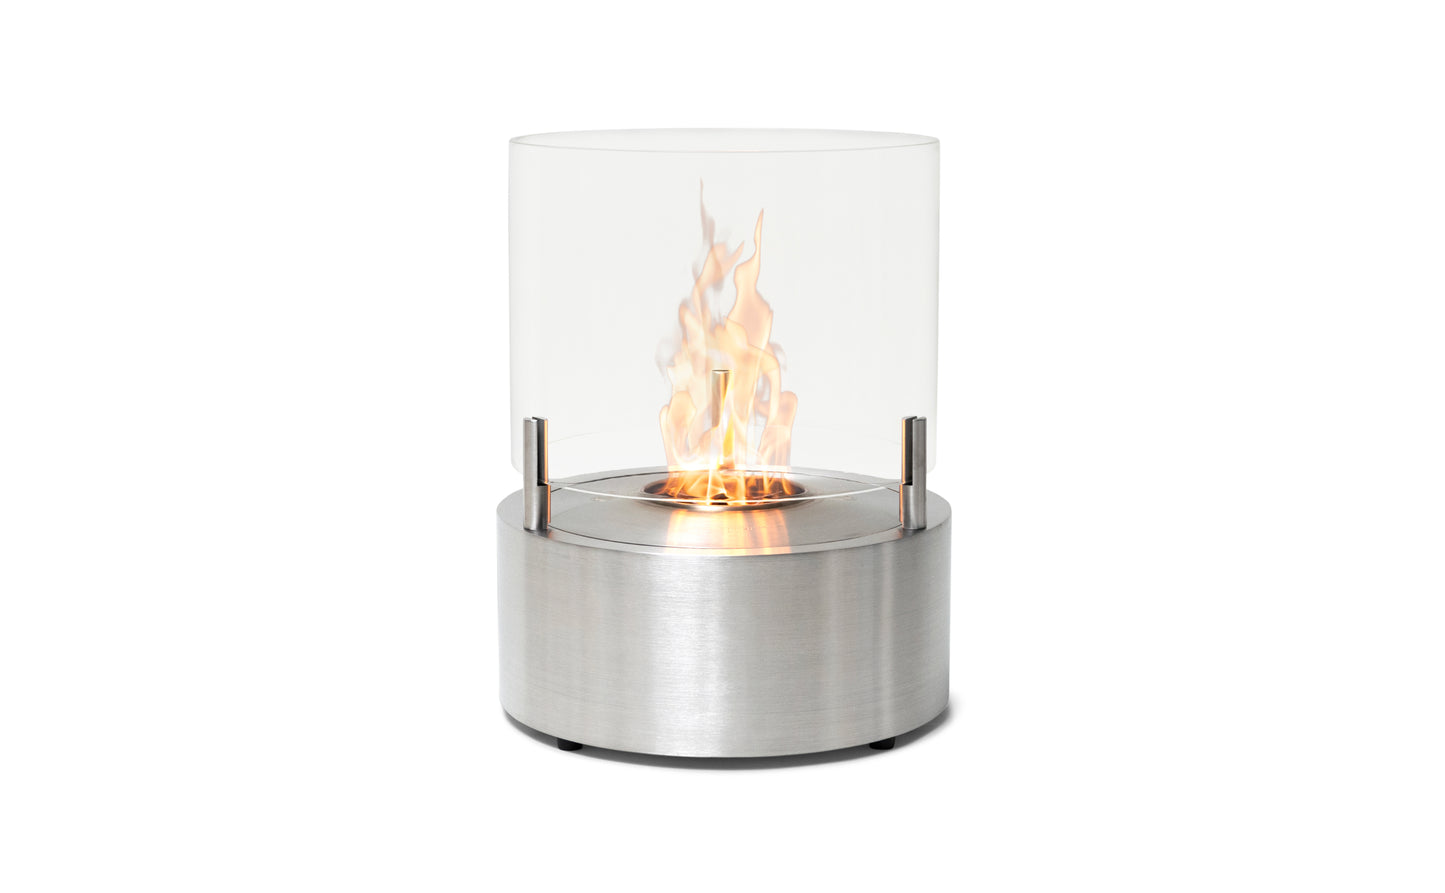 EcoSmart Fire T-Lite 8 Designer Fireplace